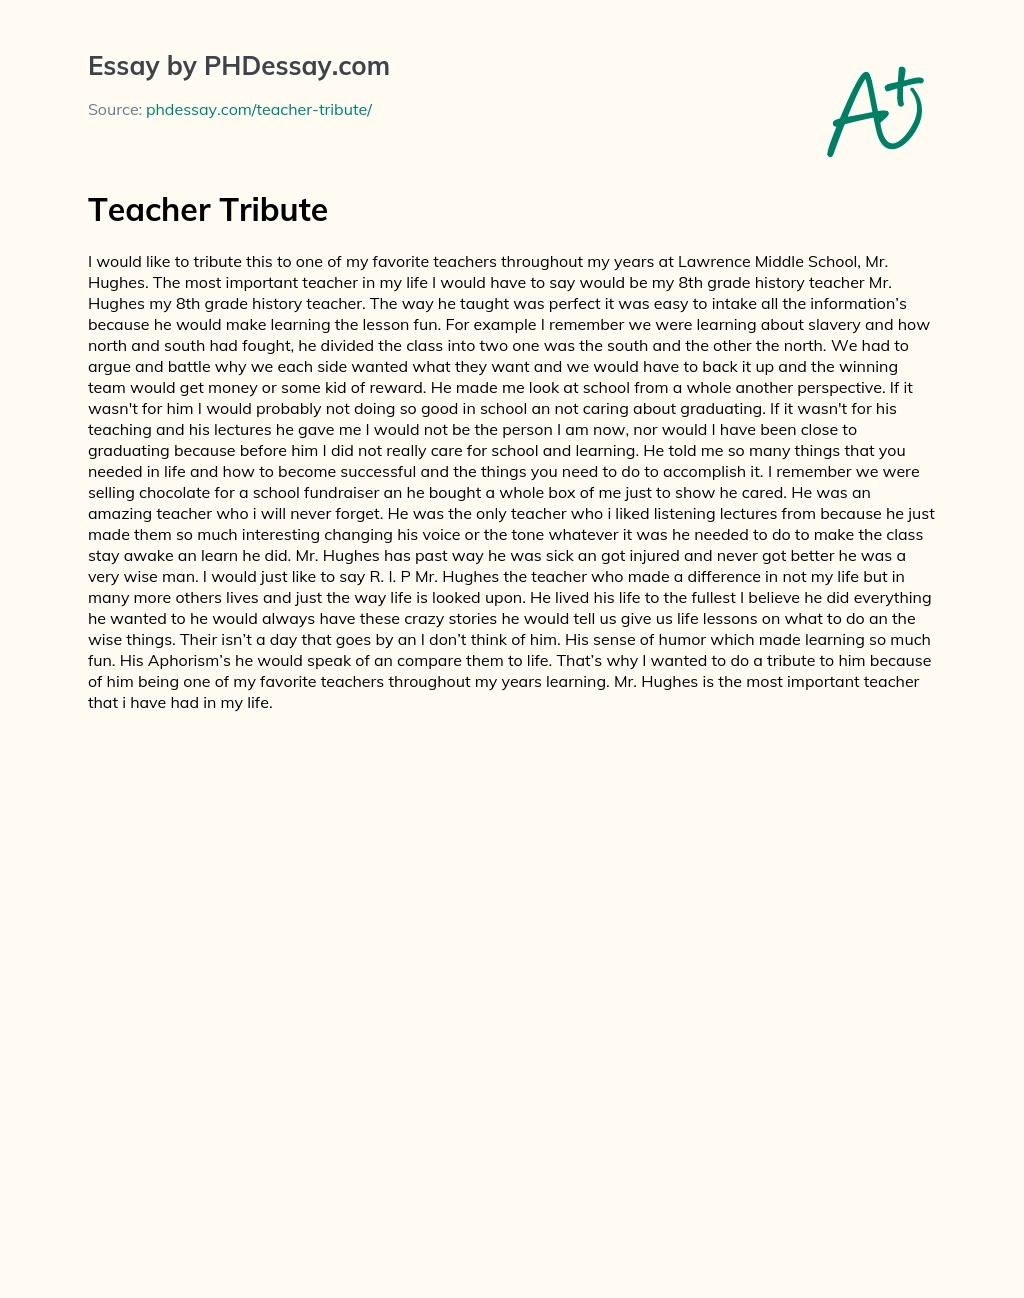 Teacher Tribute essay